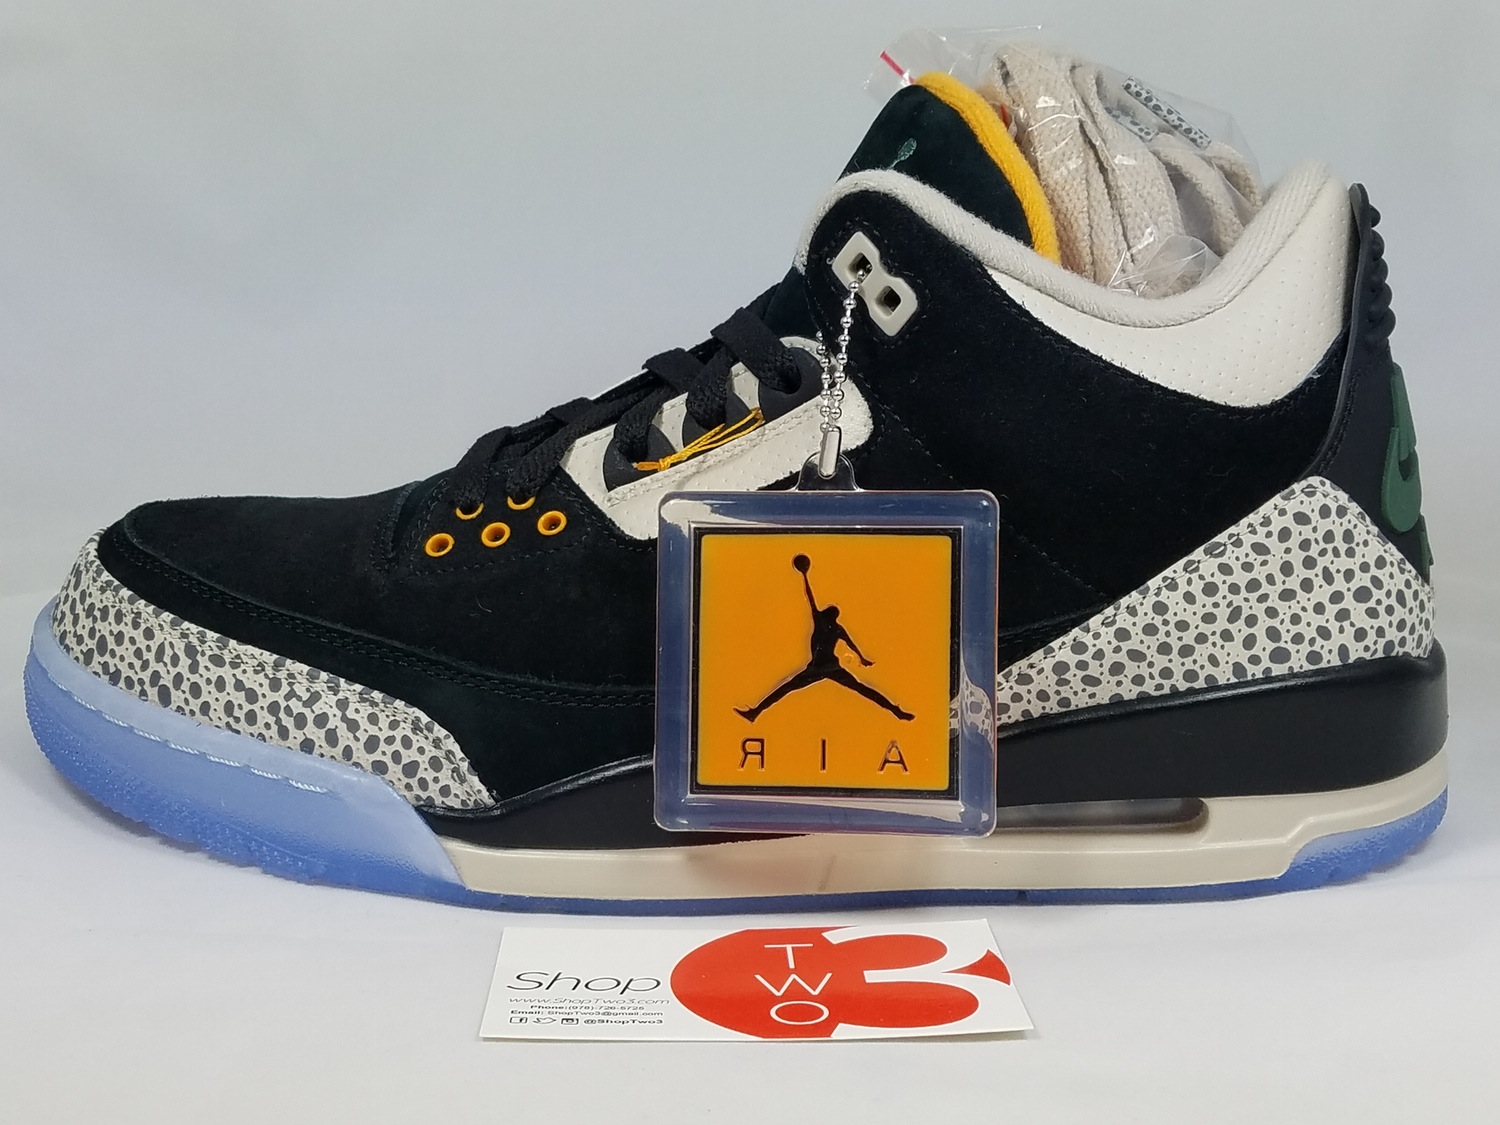 New Look At atmos x Air Jordan 3 With Nike Air Air Jordans, Release